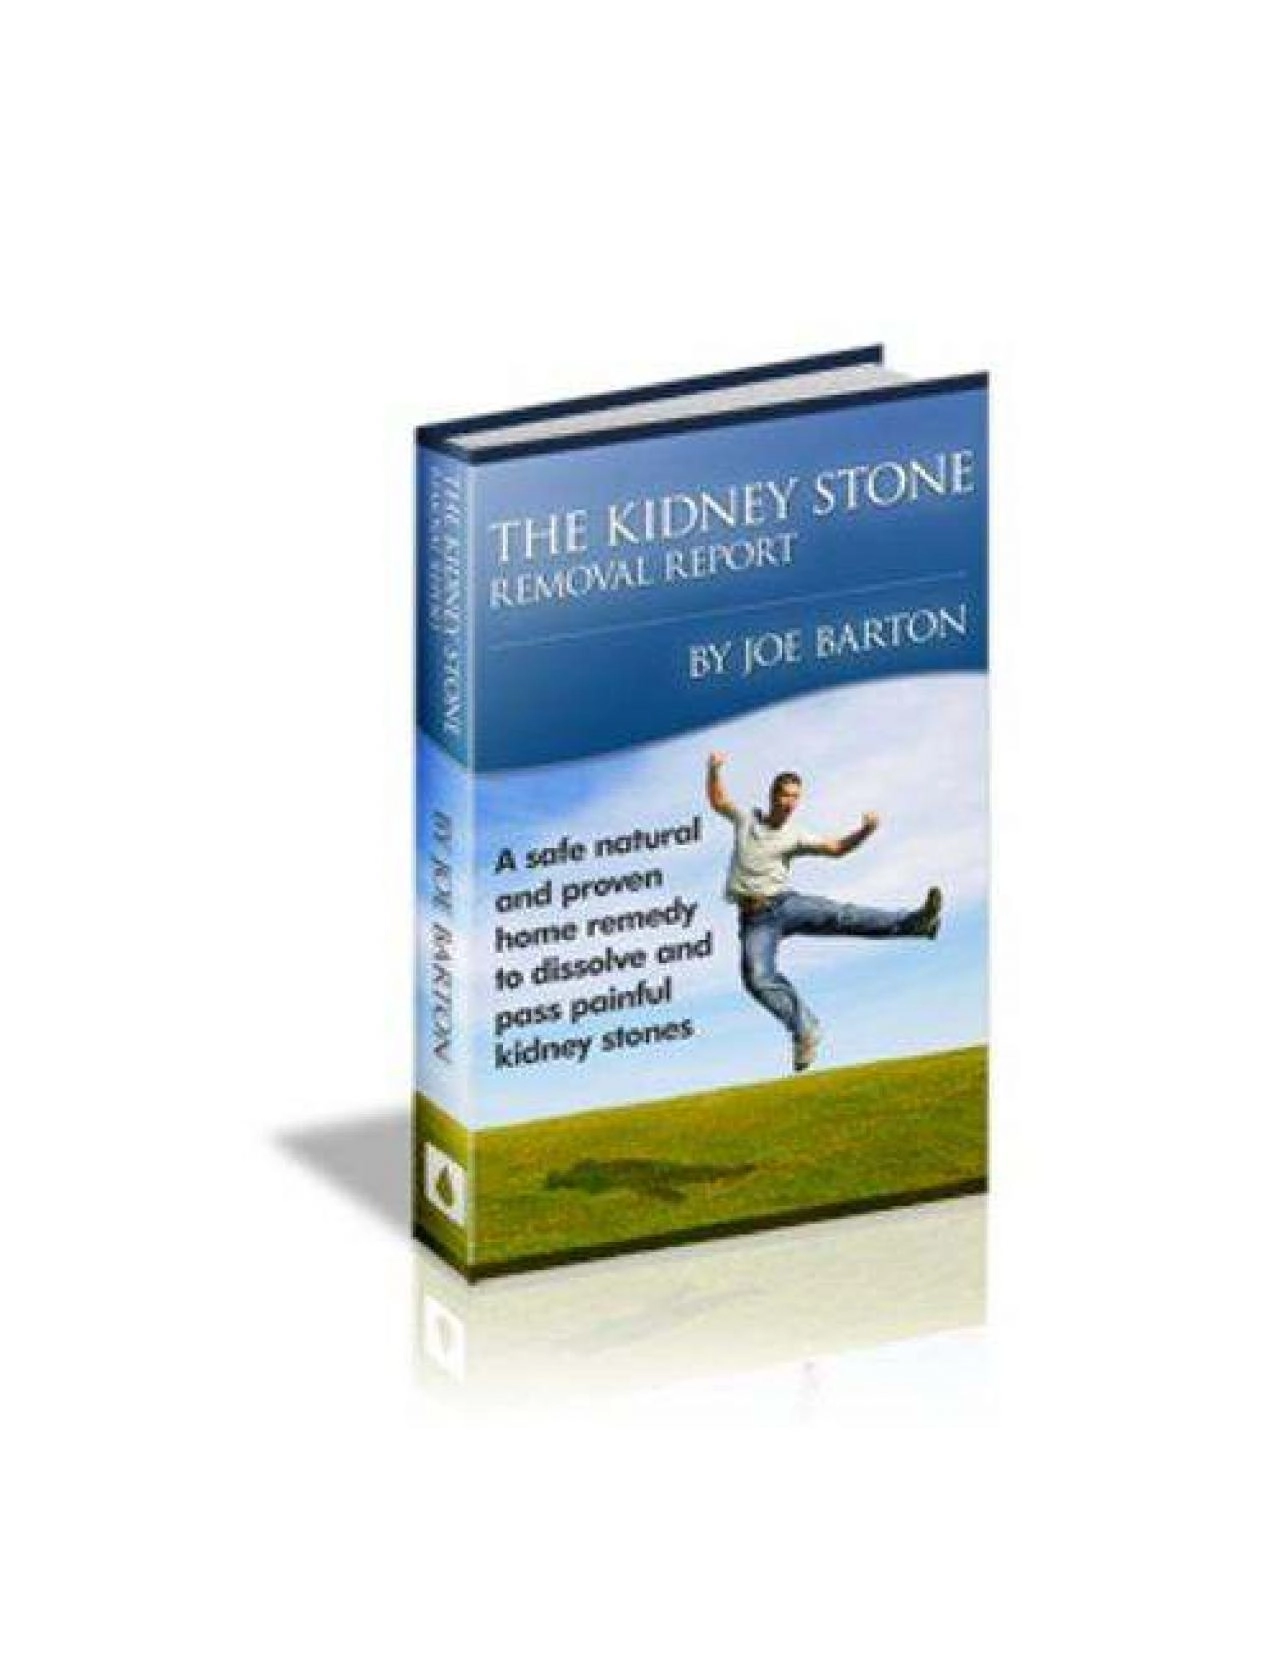 The Kidney Stone Removal Report™ PDF eBook by Joe Barton